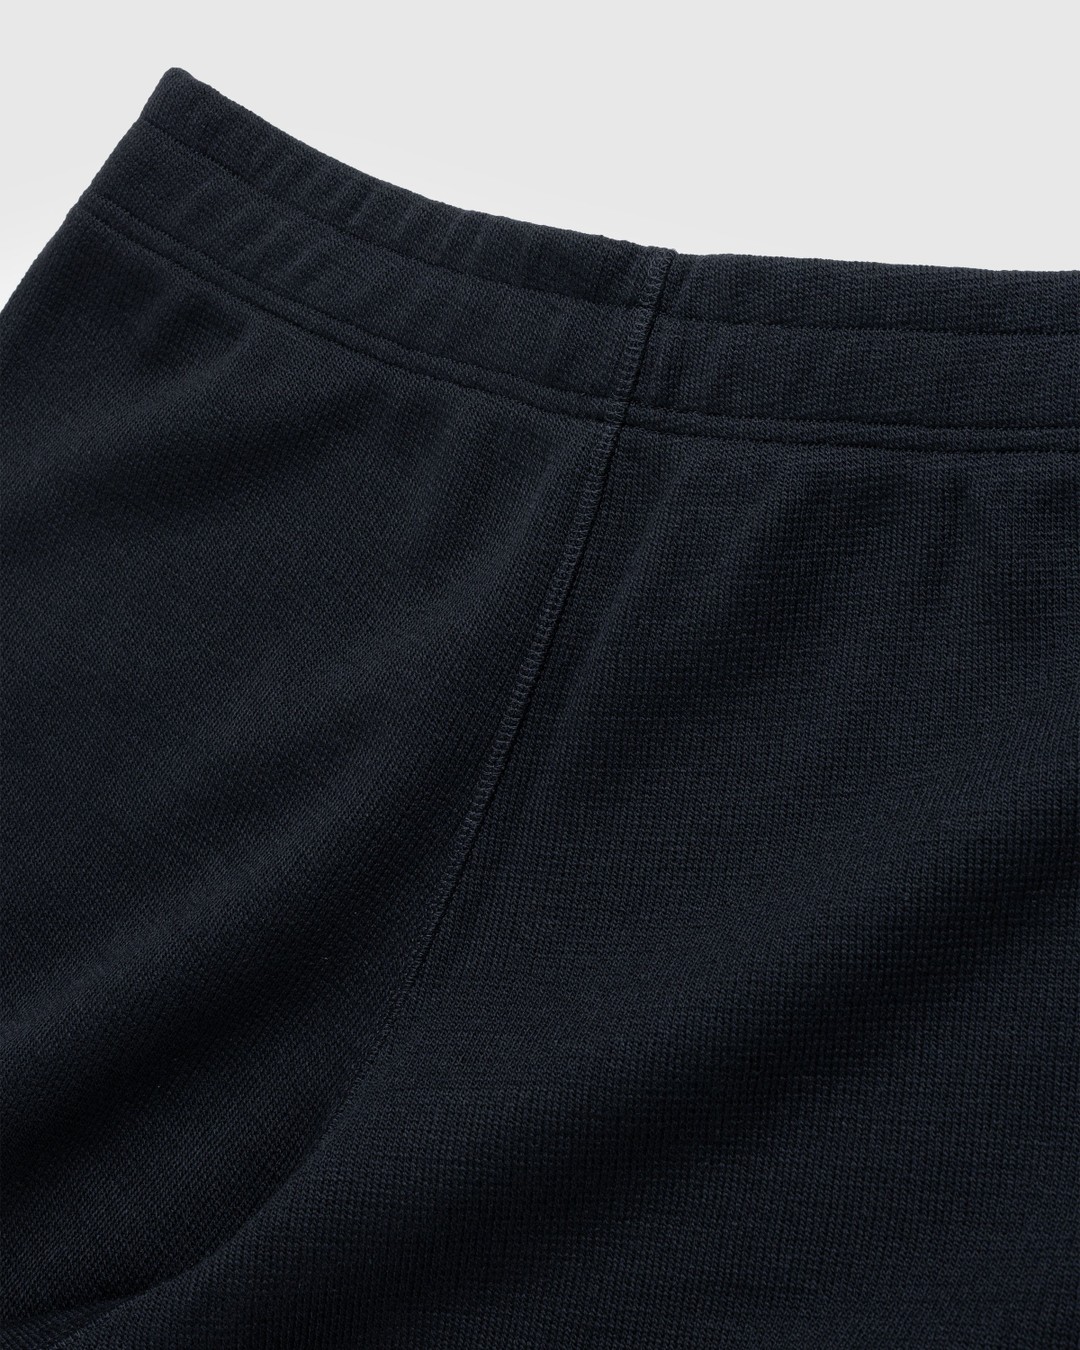 Our Legacy – Reduced Trouser Black Pseudo Knit - Pants - Black - Image 7